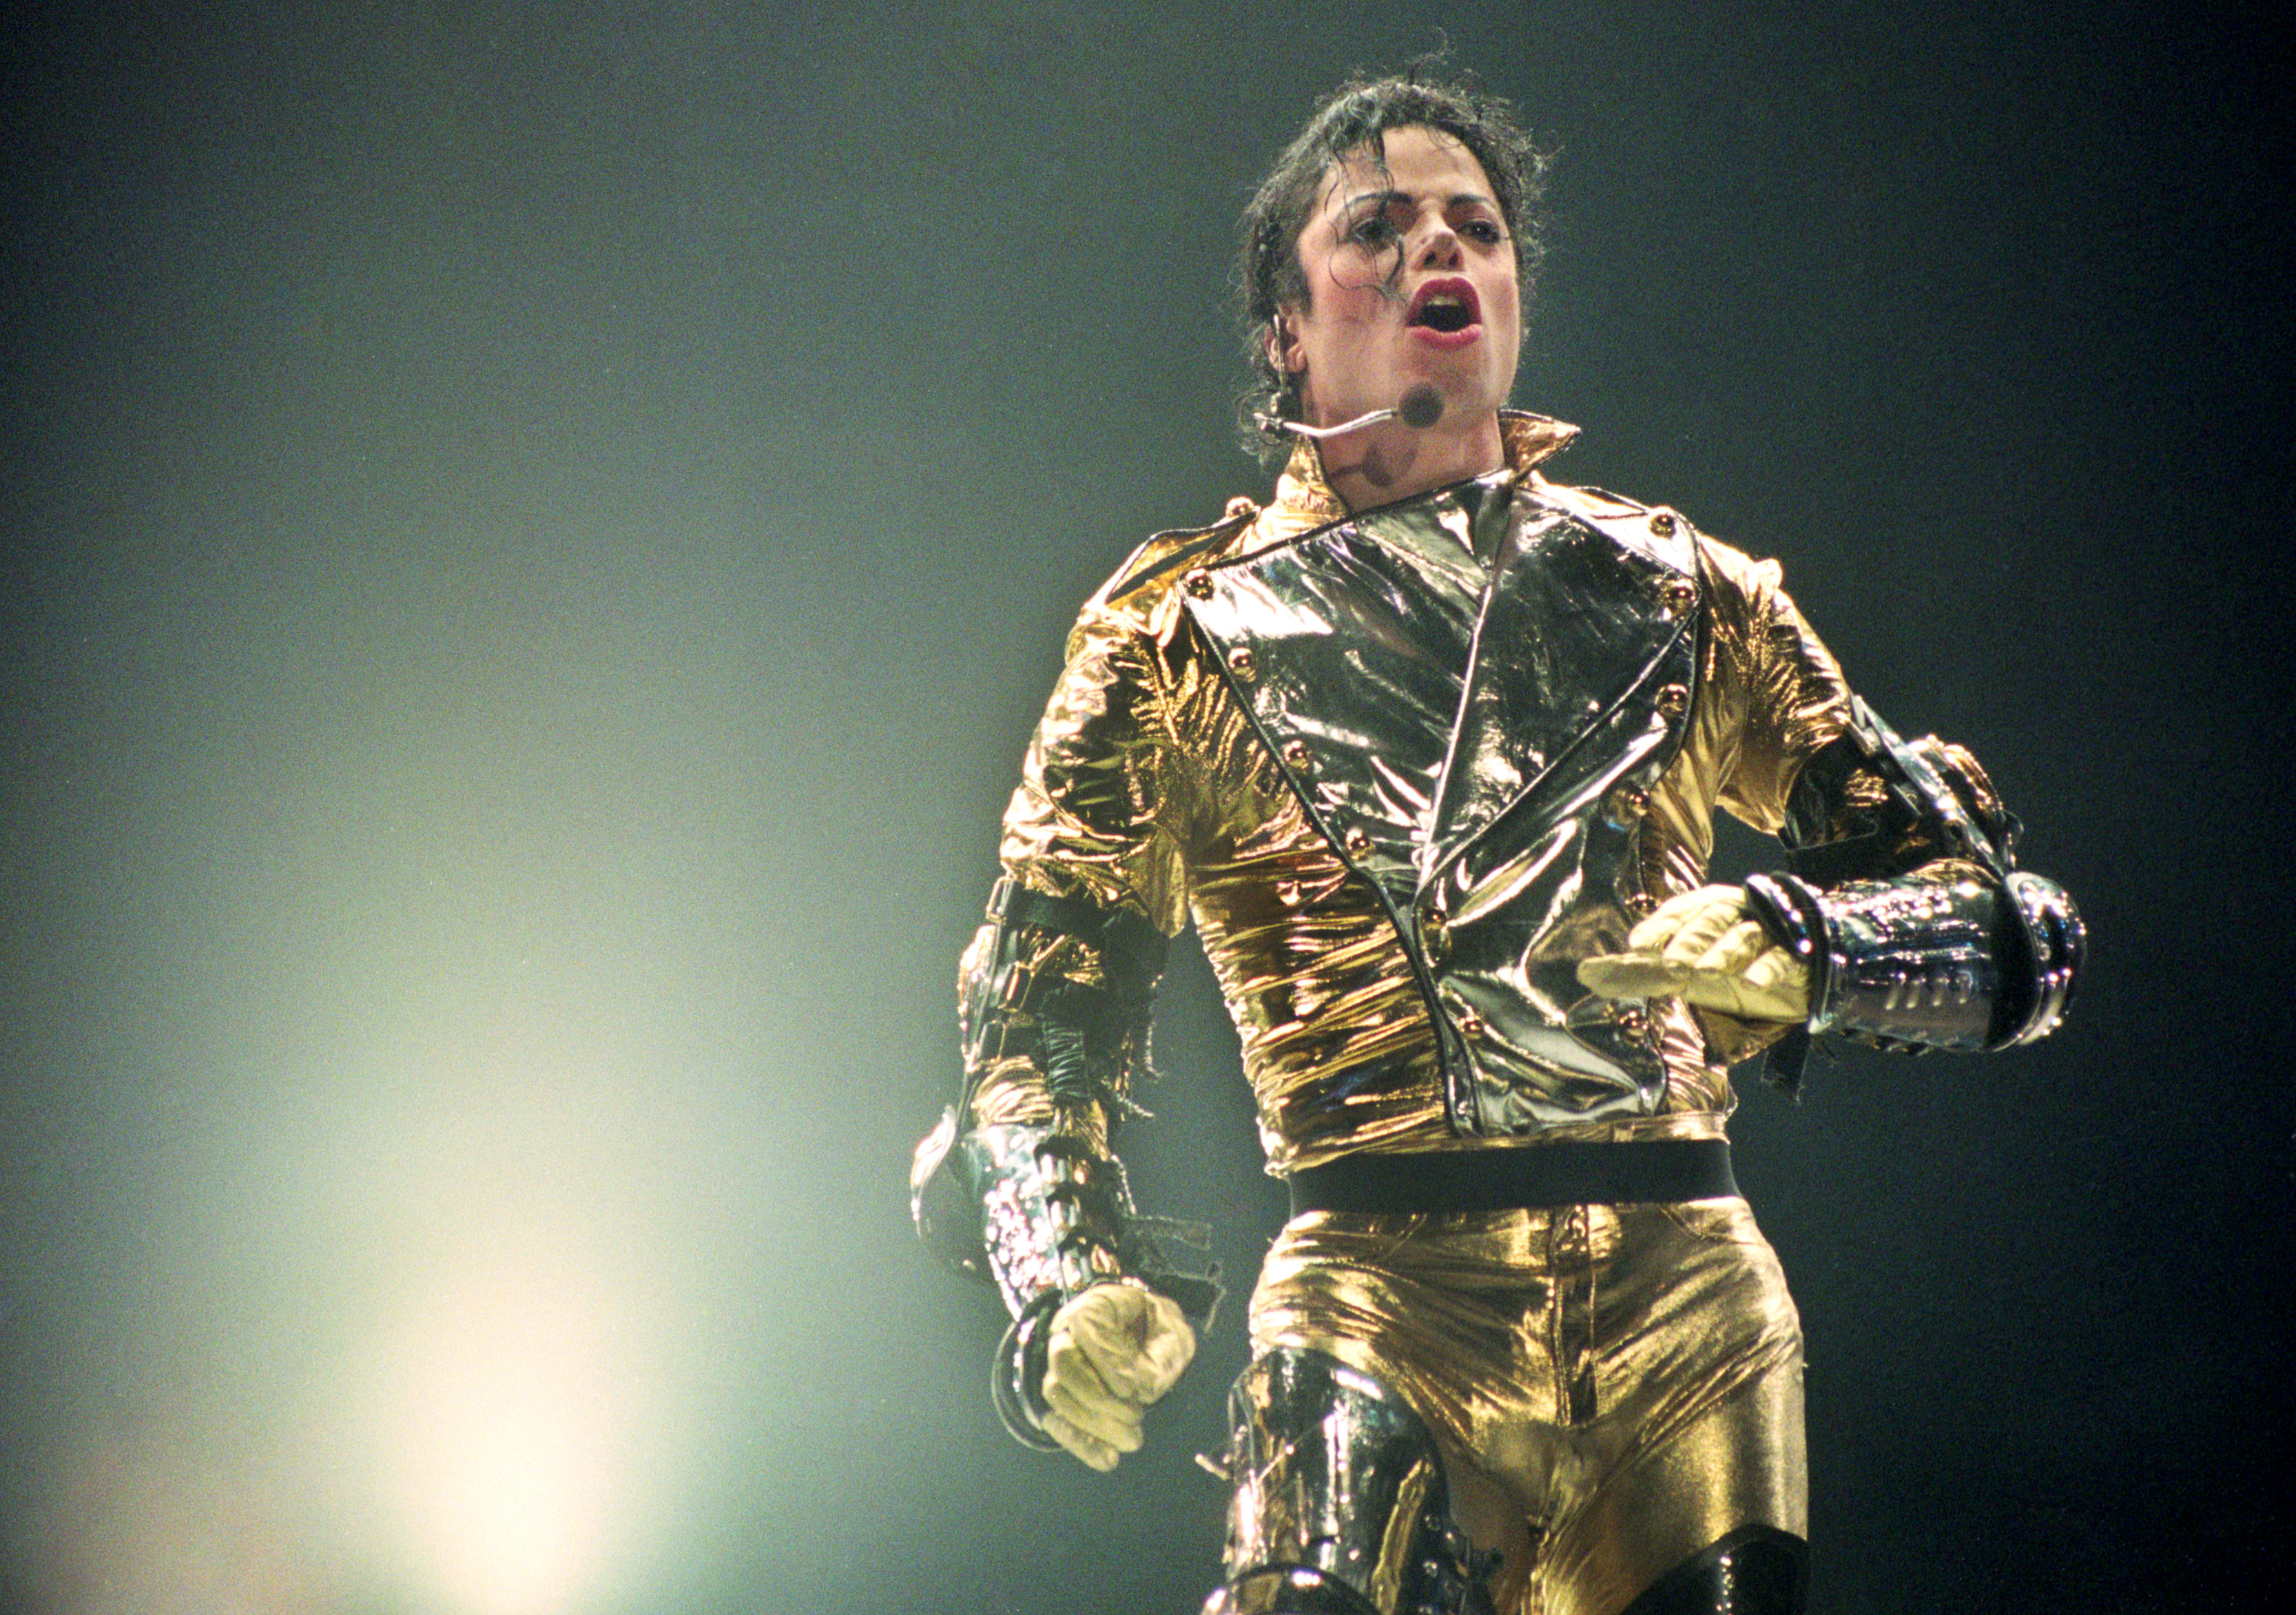 Michael Jackson musical